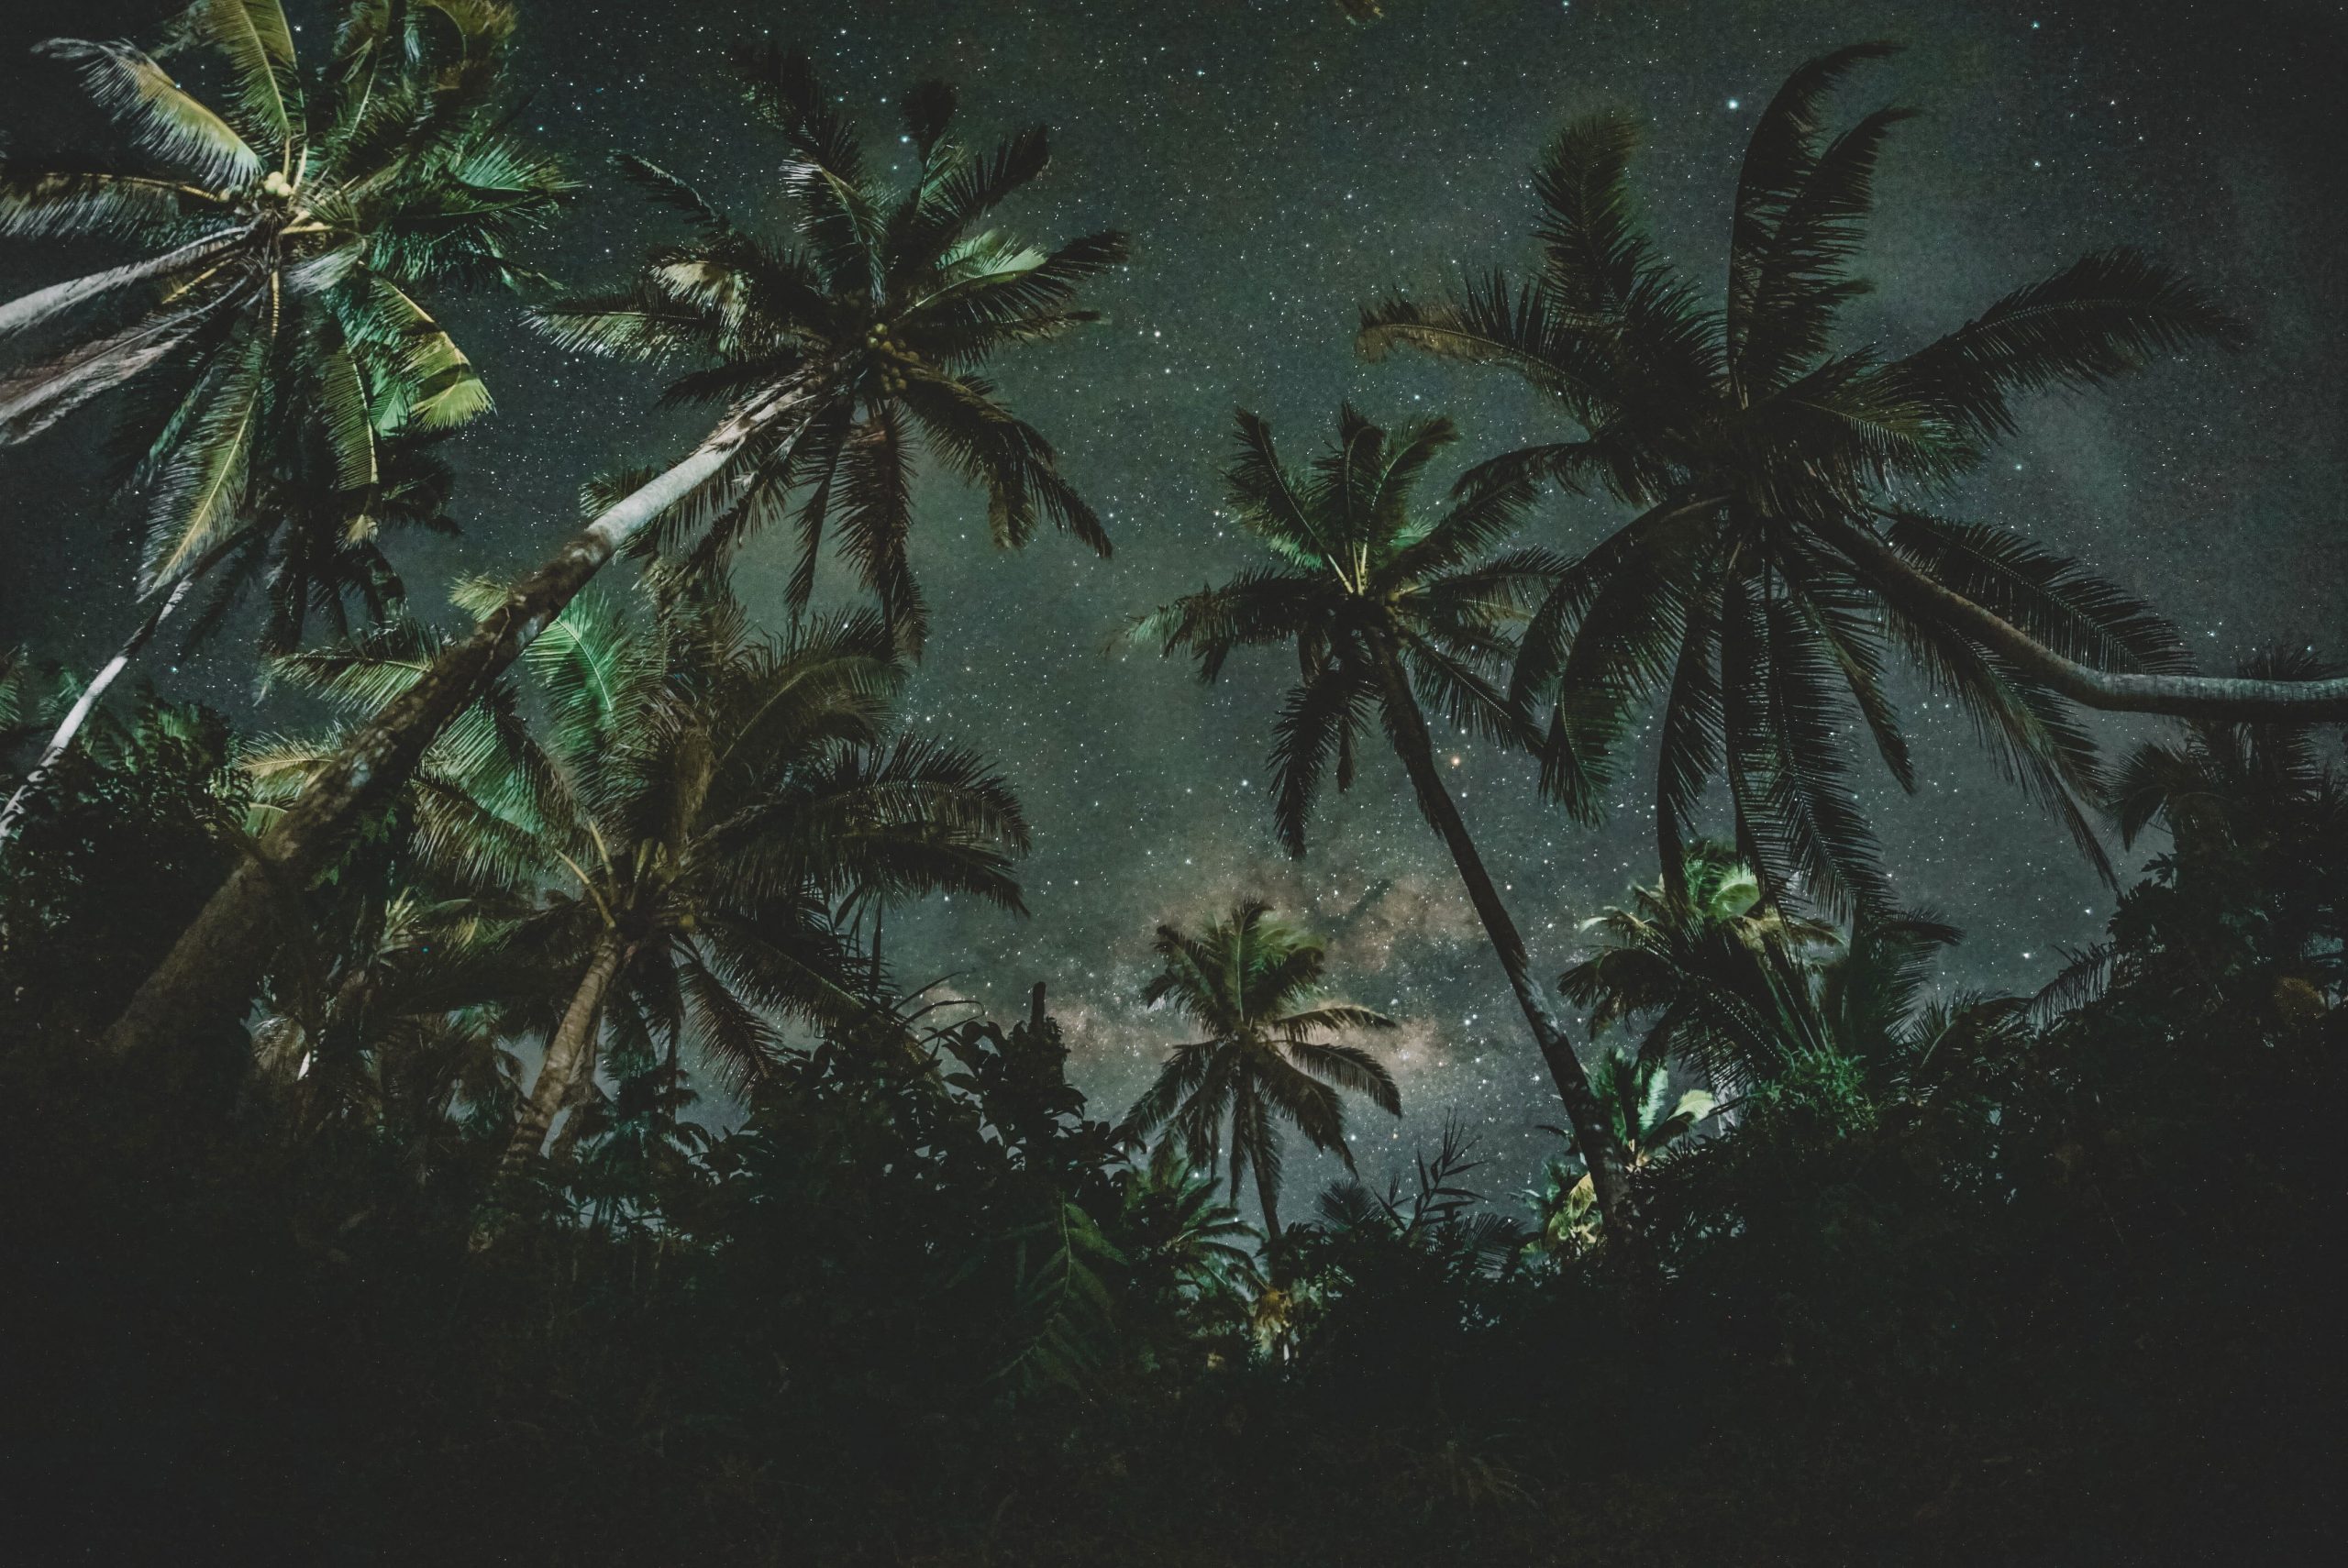 Coconut trees wallpaper, nature, starry night, palm trees, dark, plant